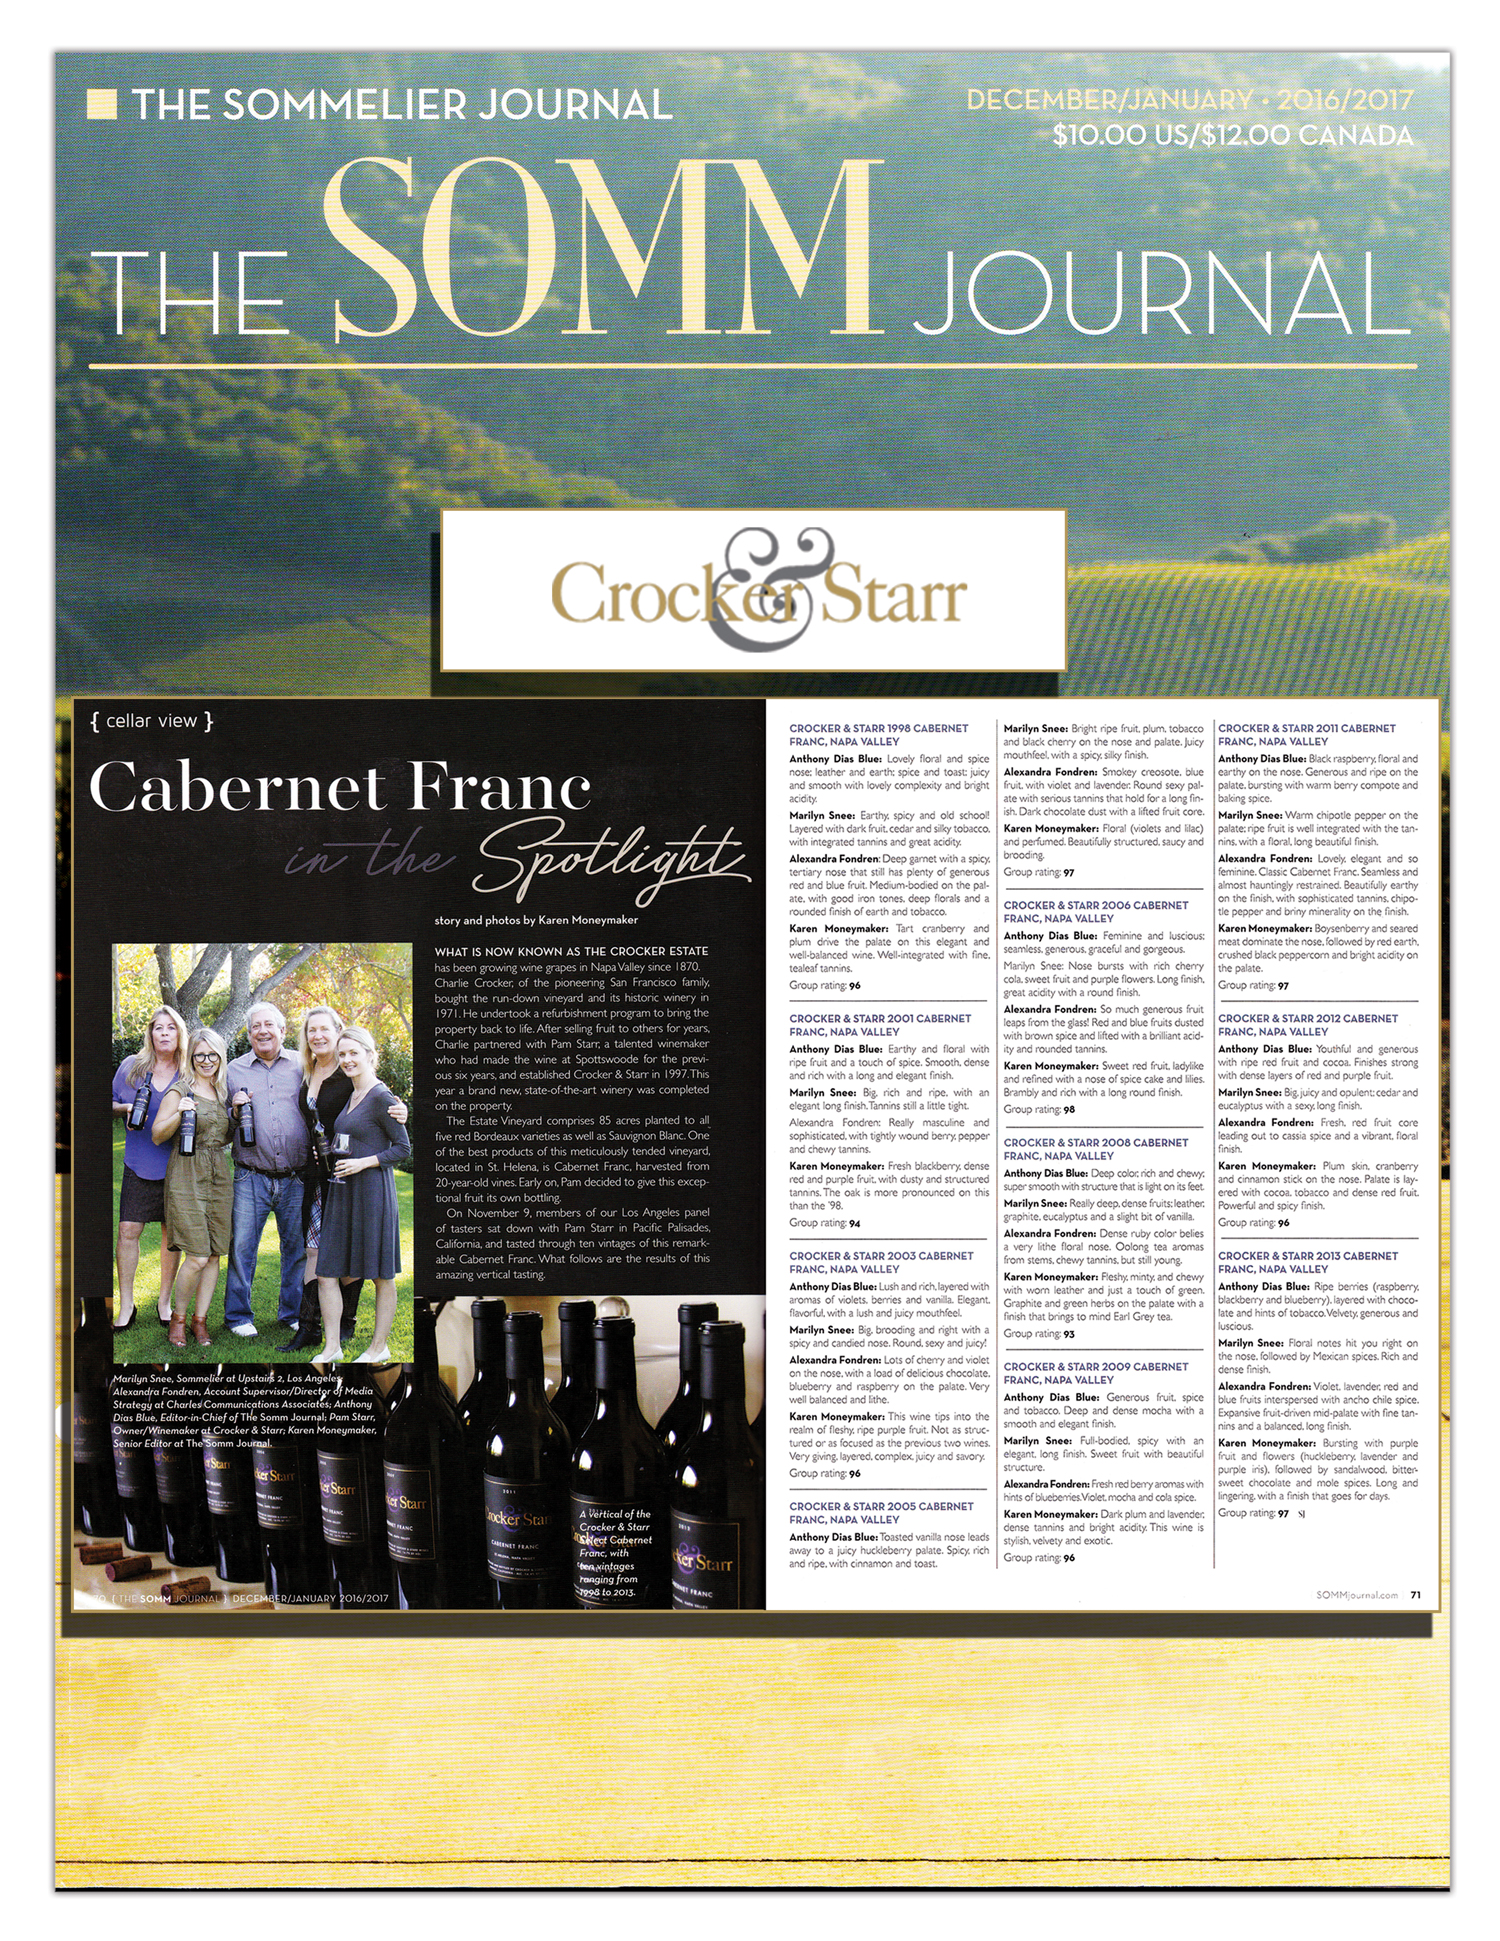 The SOMM Journal